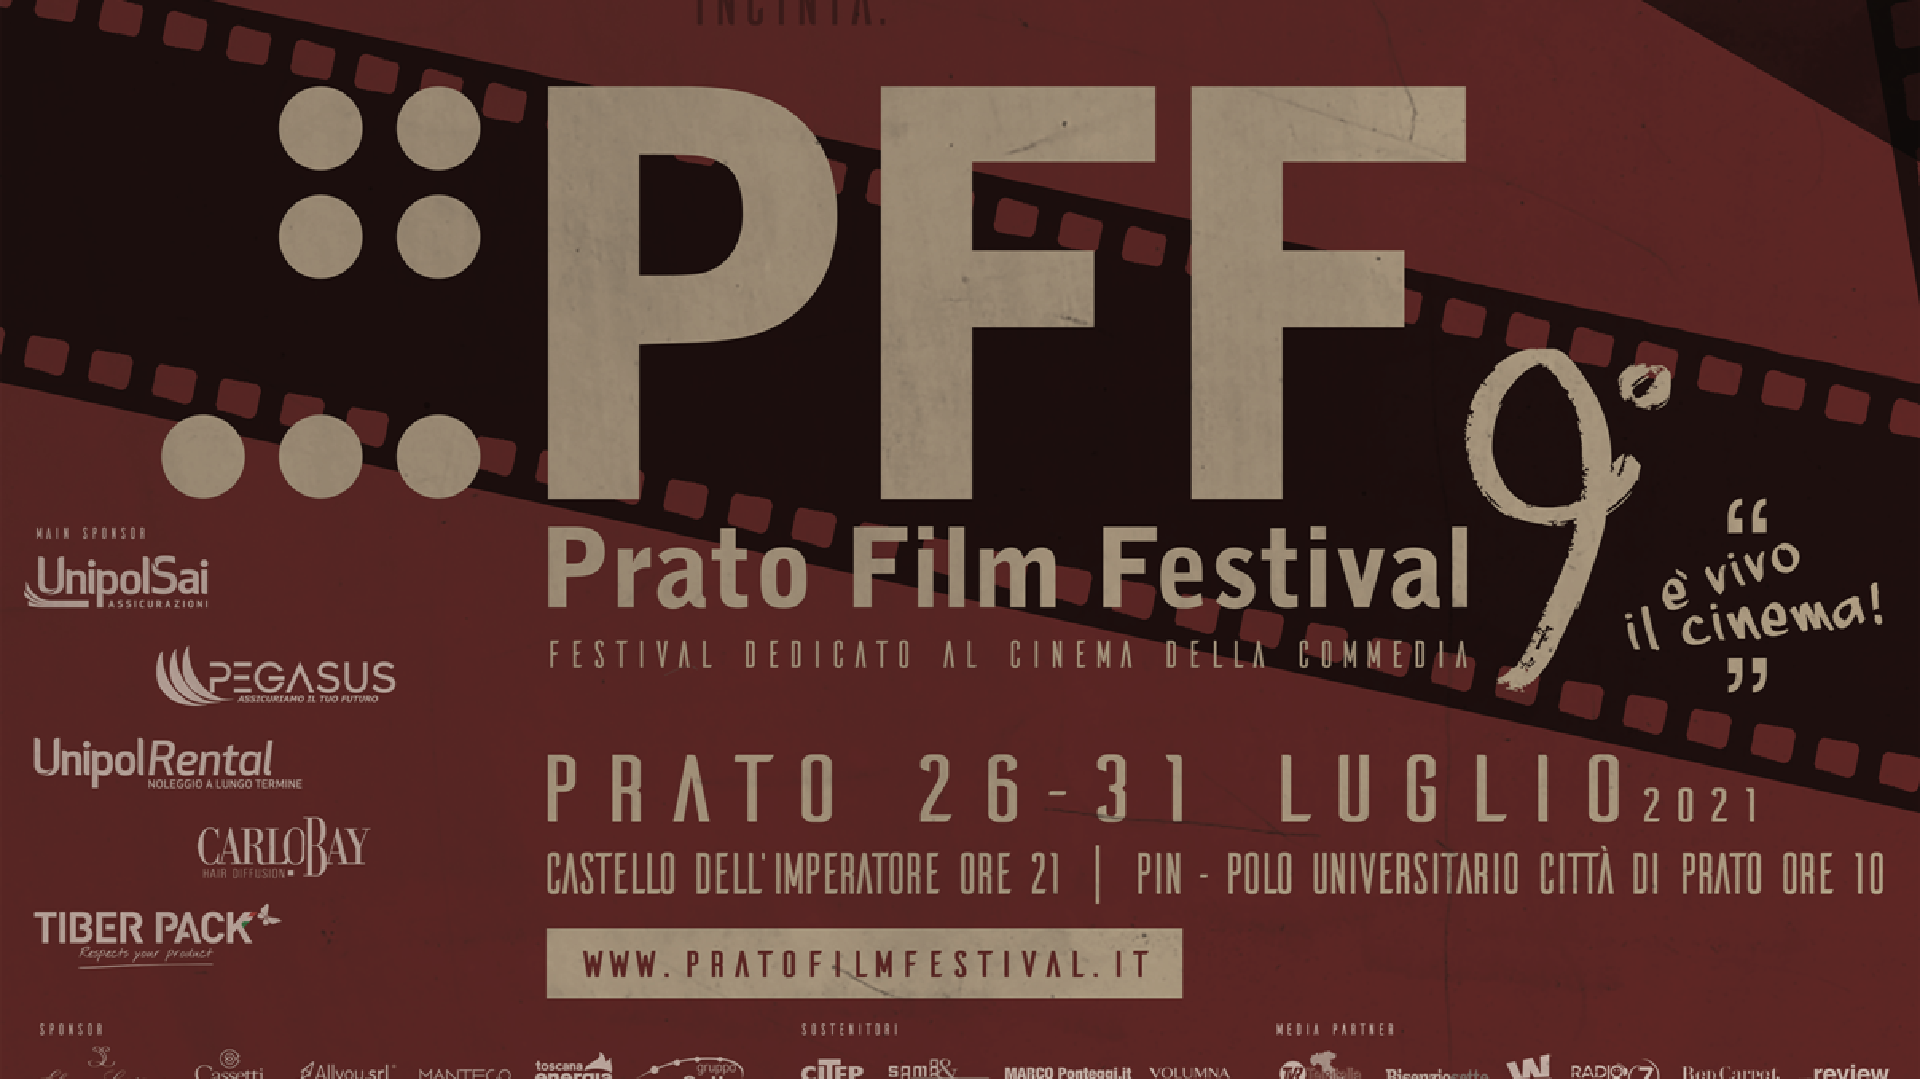 Prato Film Festival 2021, cinematographe.it